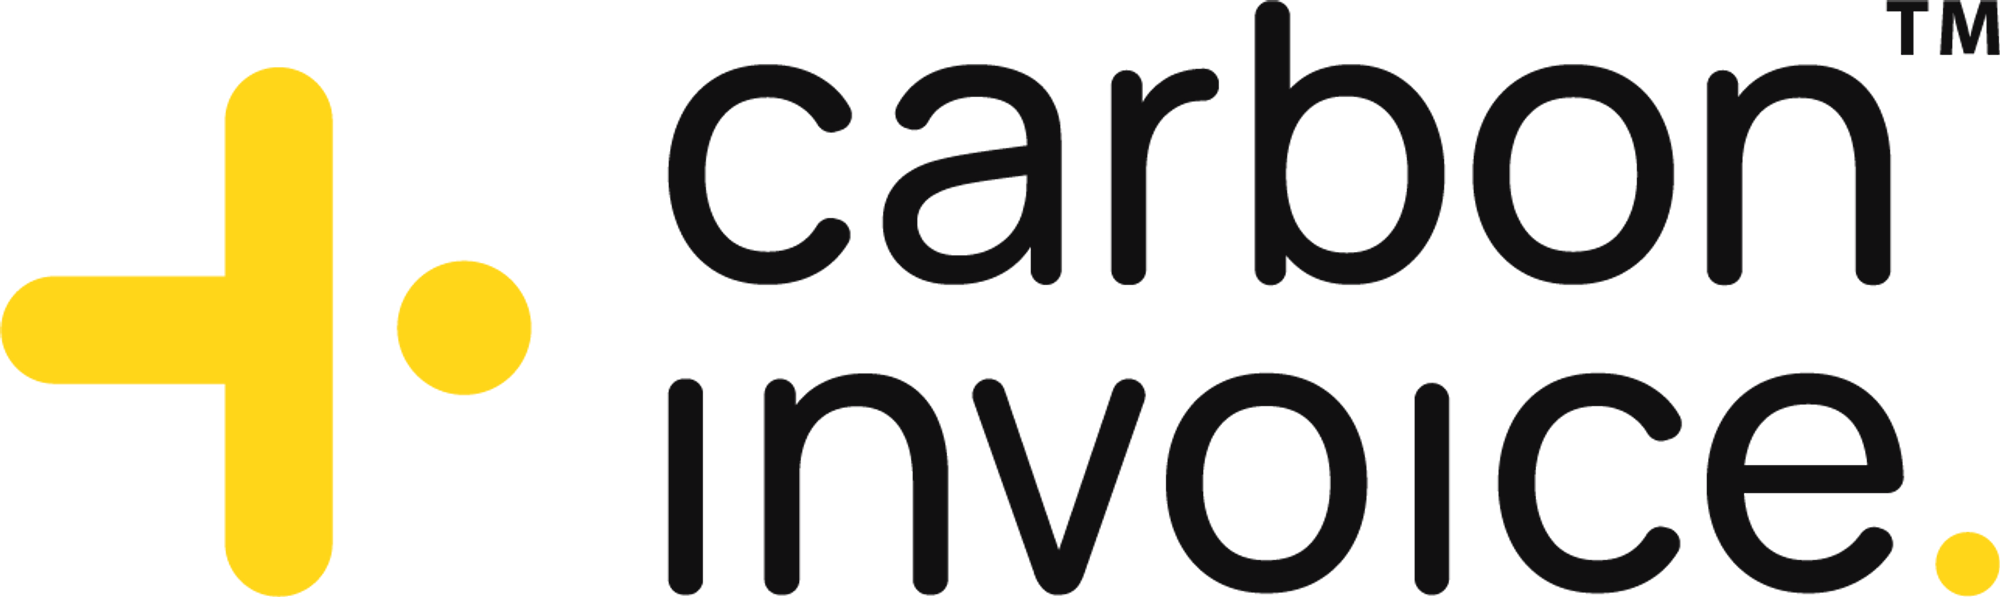 Carbon_Invoice_Logo_Vertical_on_White